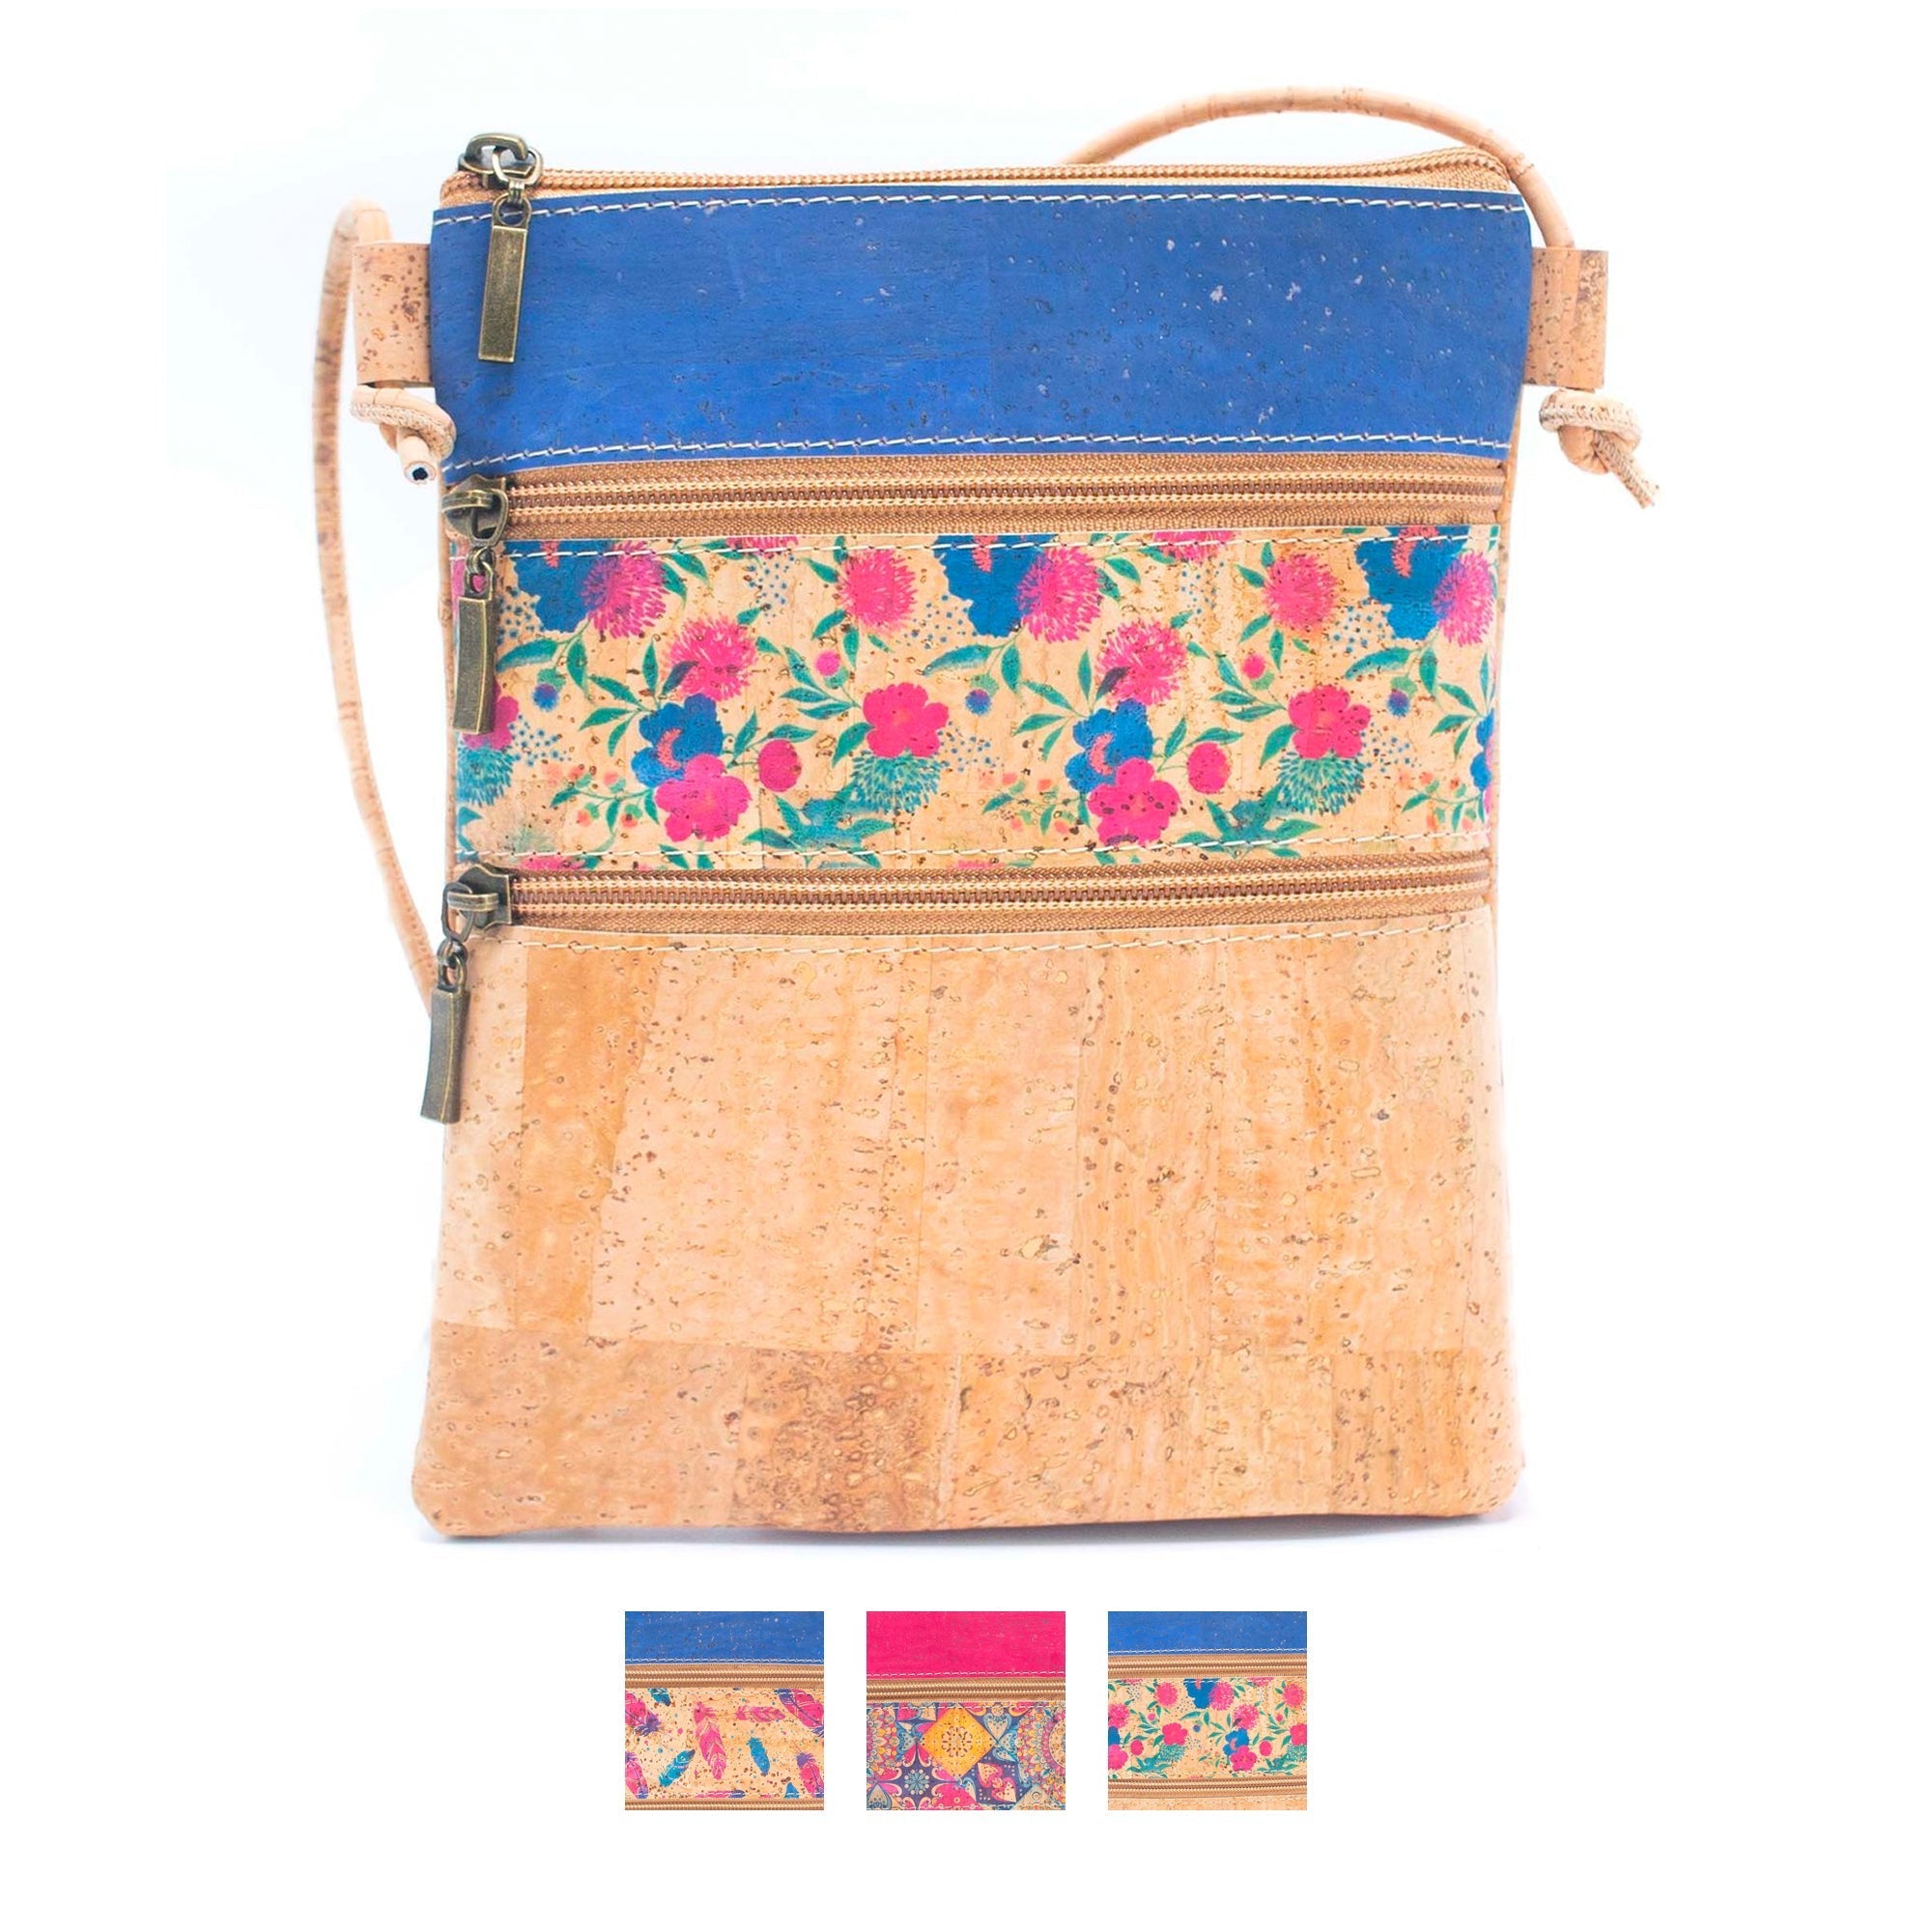 DIY Small Ladies Zipper Purse With Zipper||Small Fancy Handbag Making At  Home #Handpurse #Stitching | How to make handbags, Fancy handbags, Small  lady